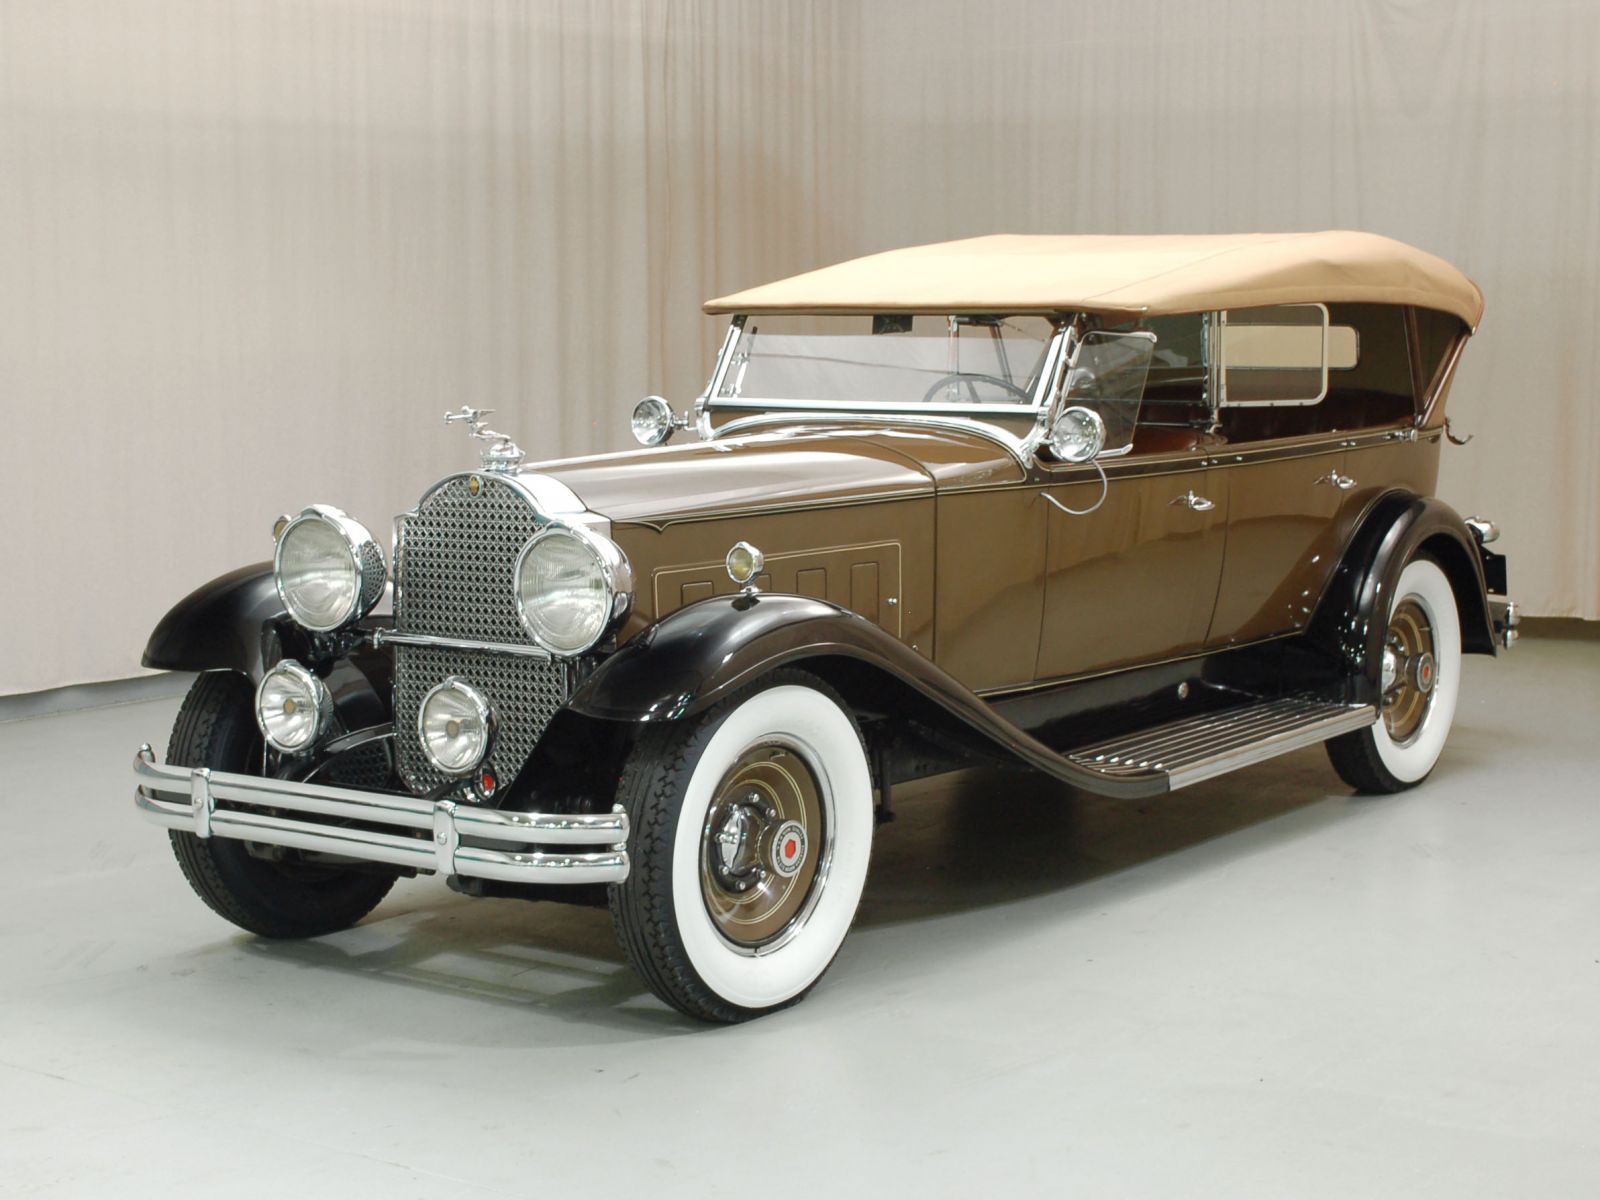 Packard Six Phaeton Wallpapers